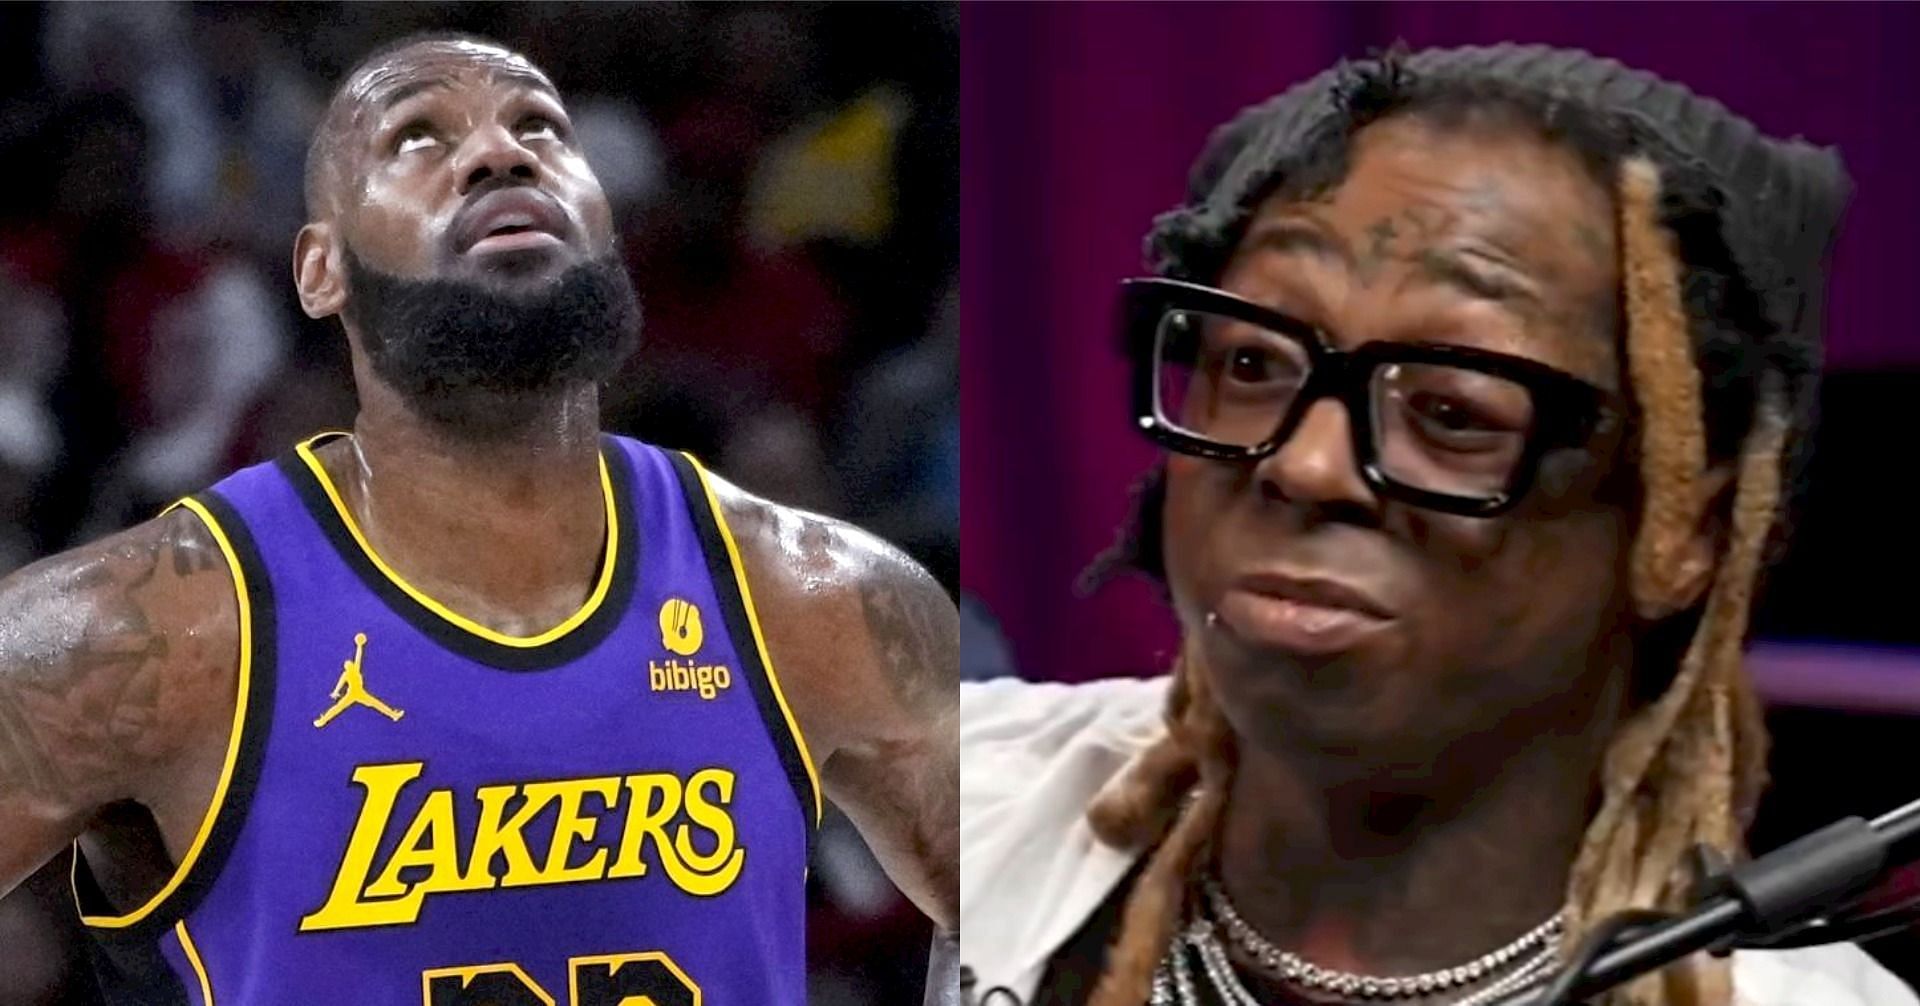 LA Lakers superstar forward LeBron James and rap star Lil Wayne